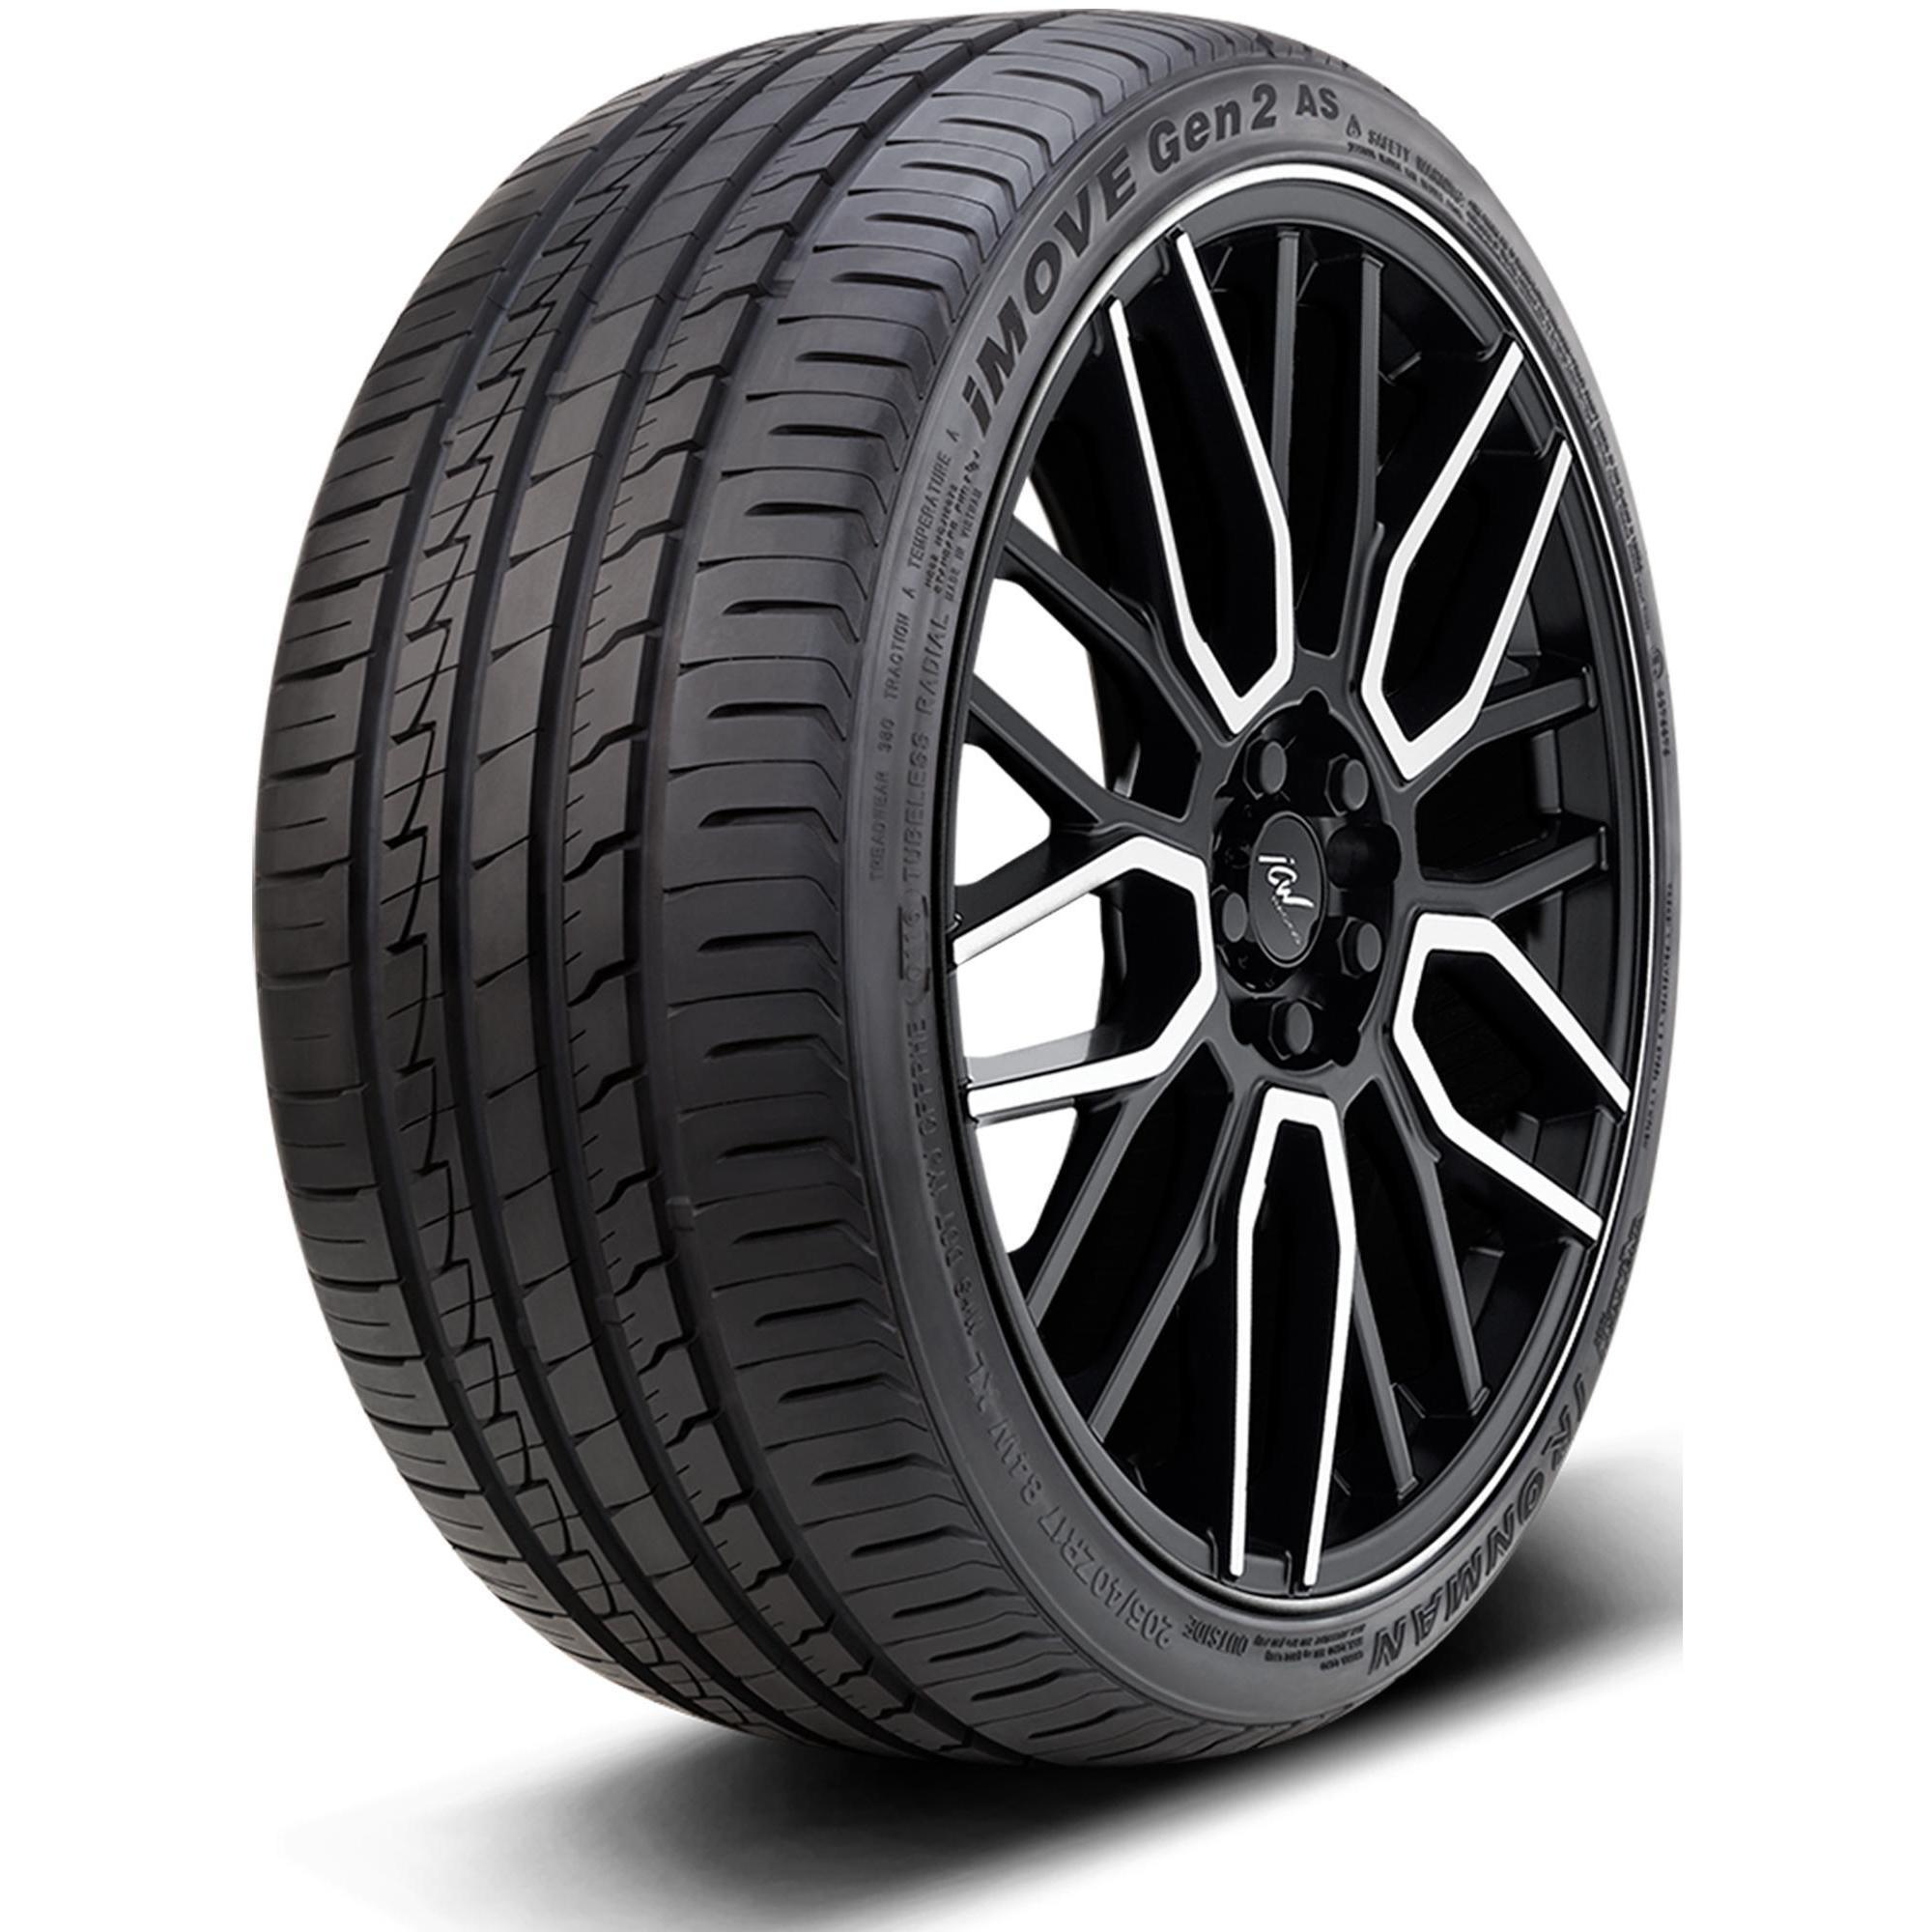 IRONMAN IMOVE GEN2 AS 255/45ZR20XL (29.1X10R 20) Tires